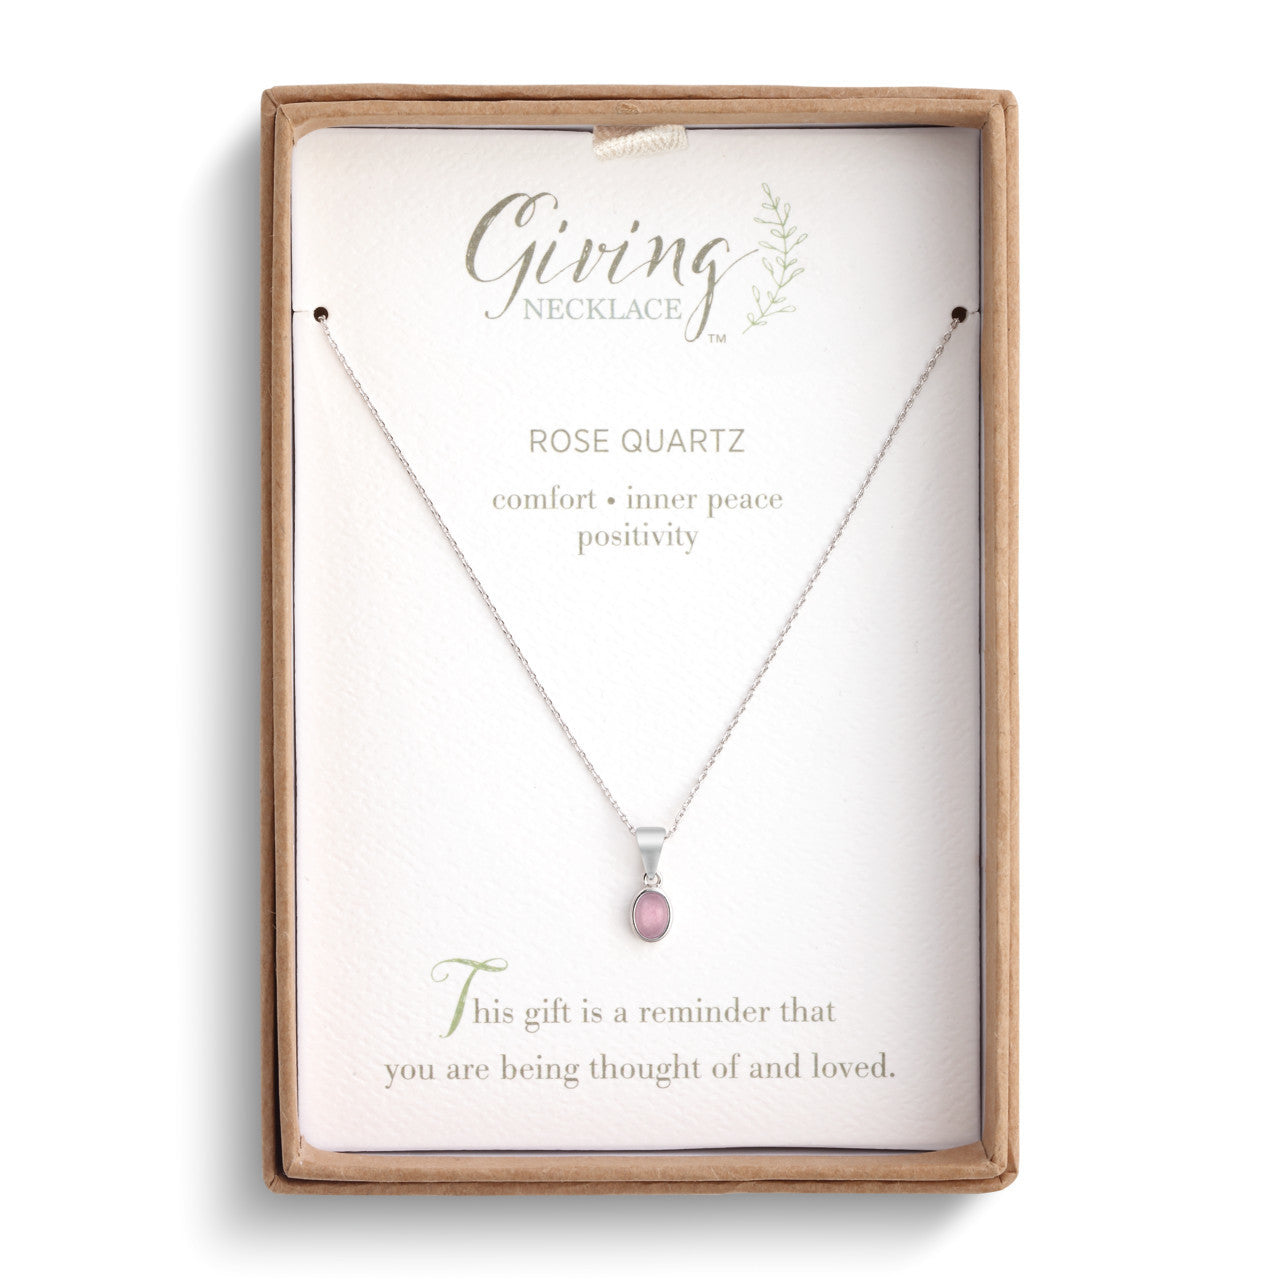 The Giving Necklace - Rose Quartz